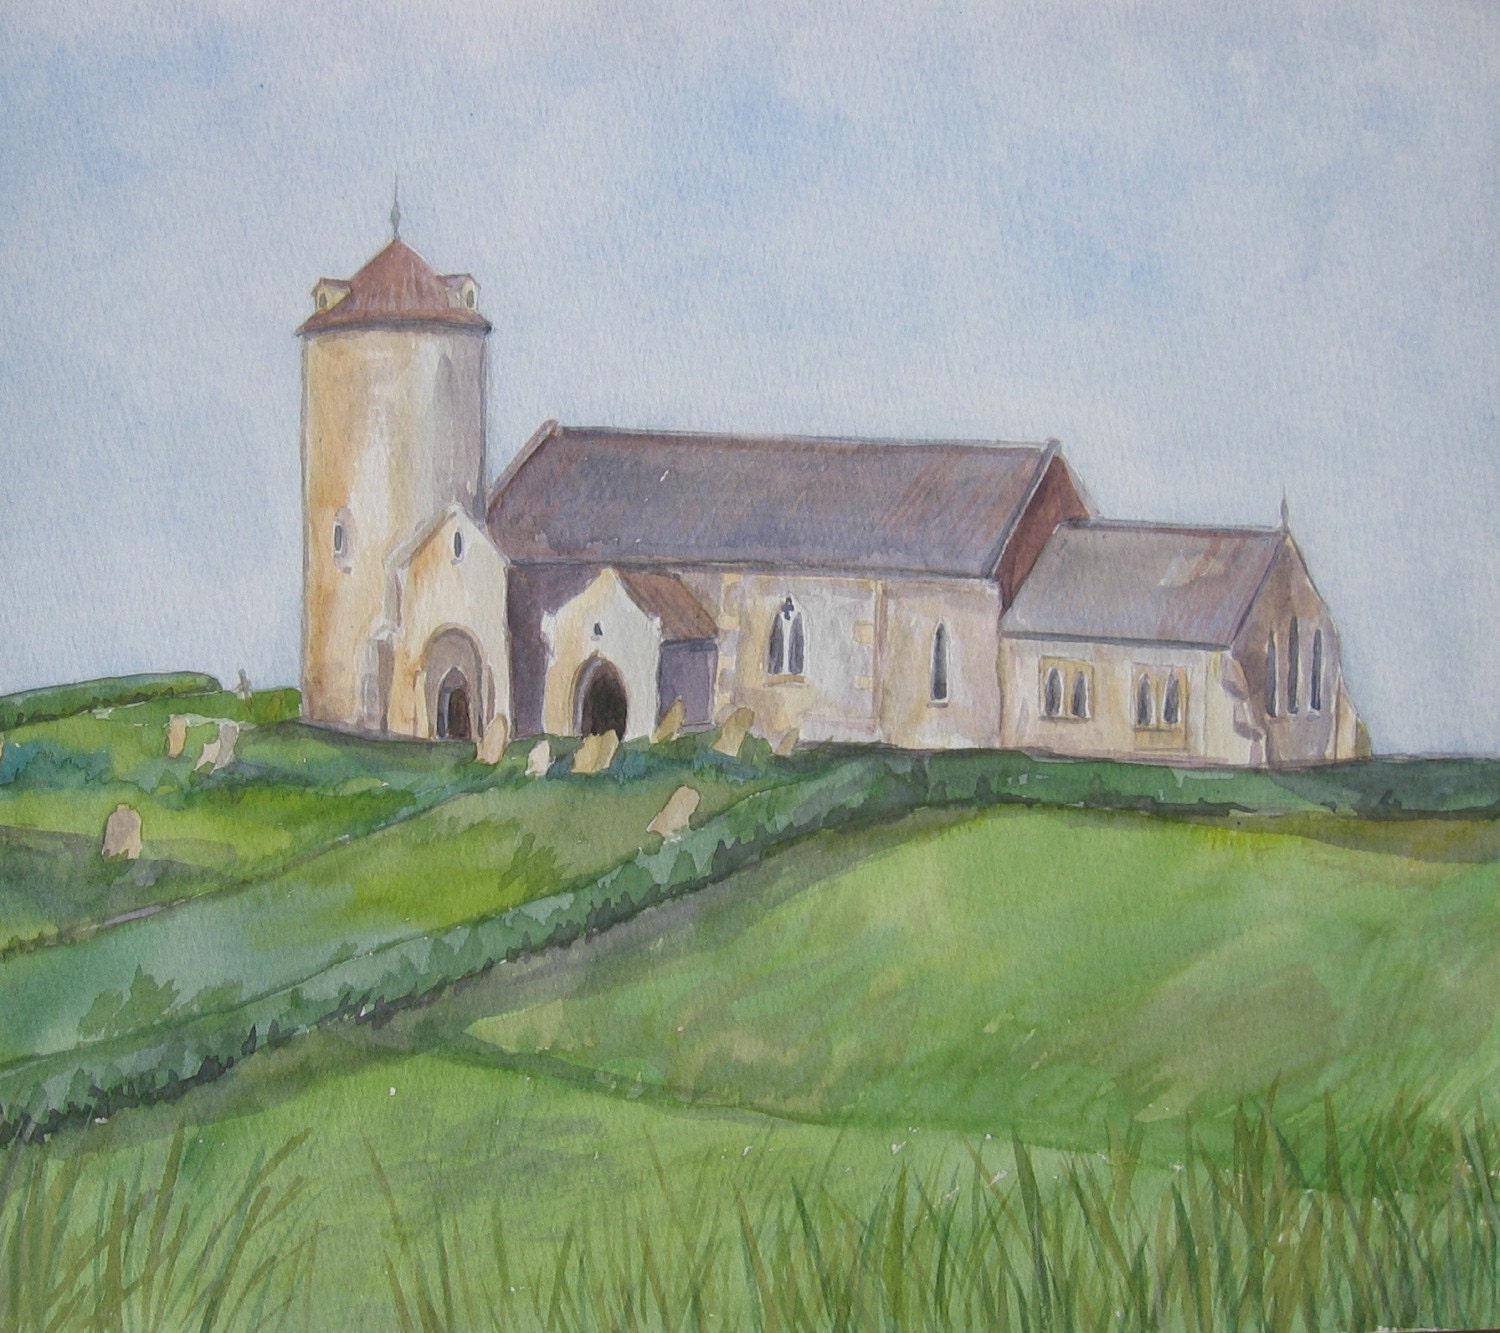 Church on a hill - Original Watercolour painting